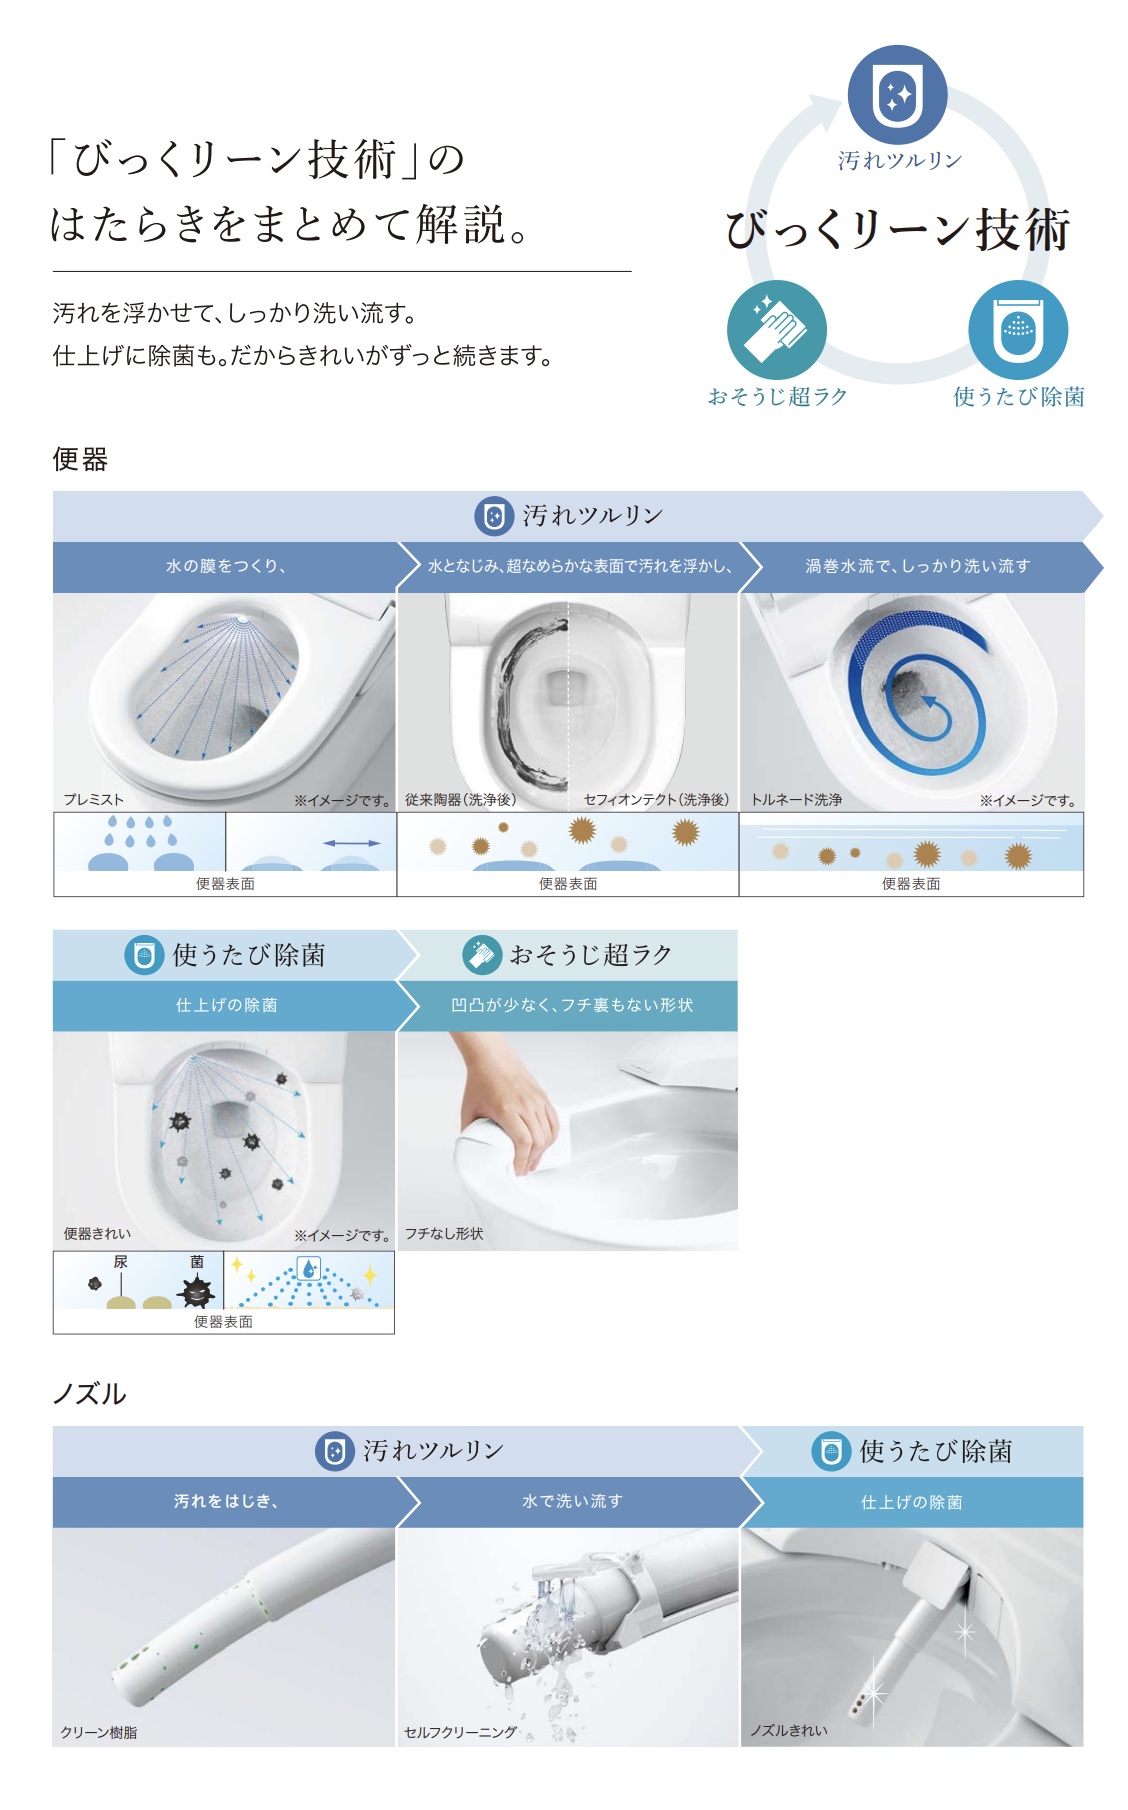 CES9720PXのトイレきれいの技術